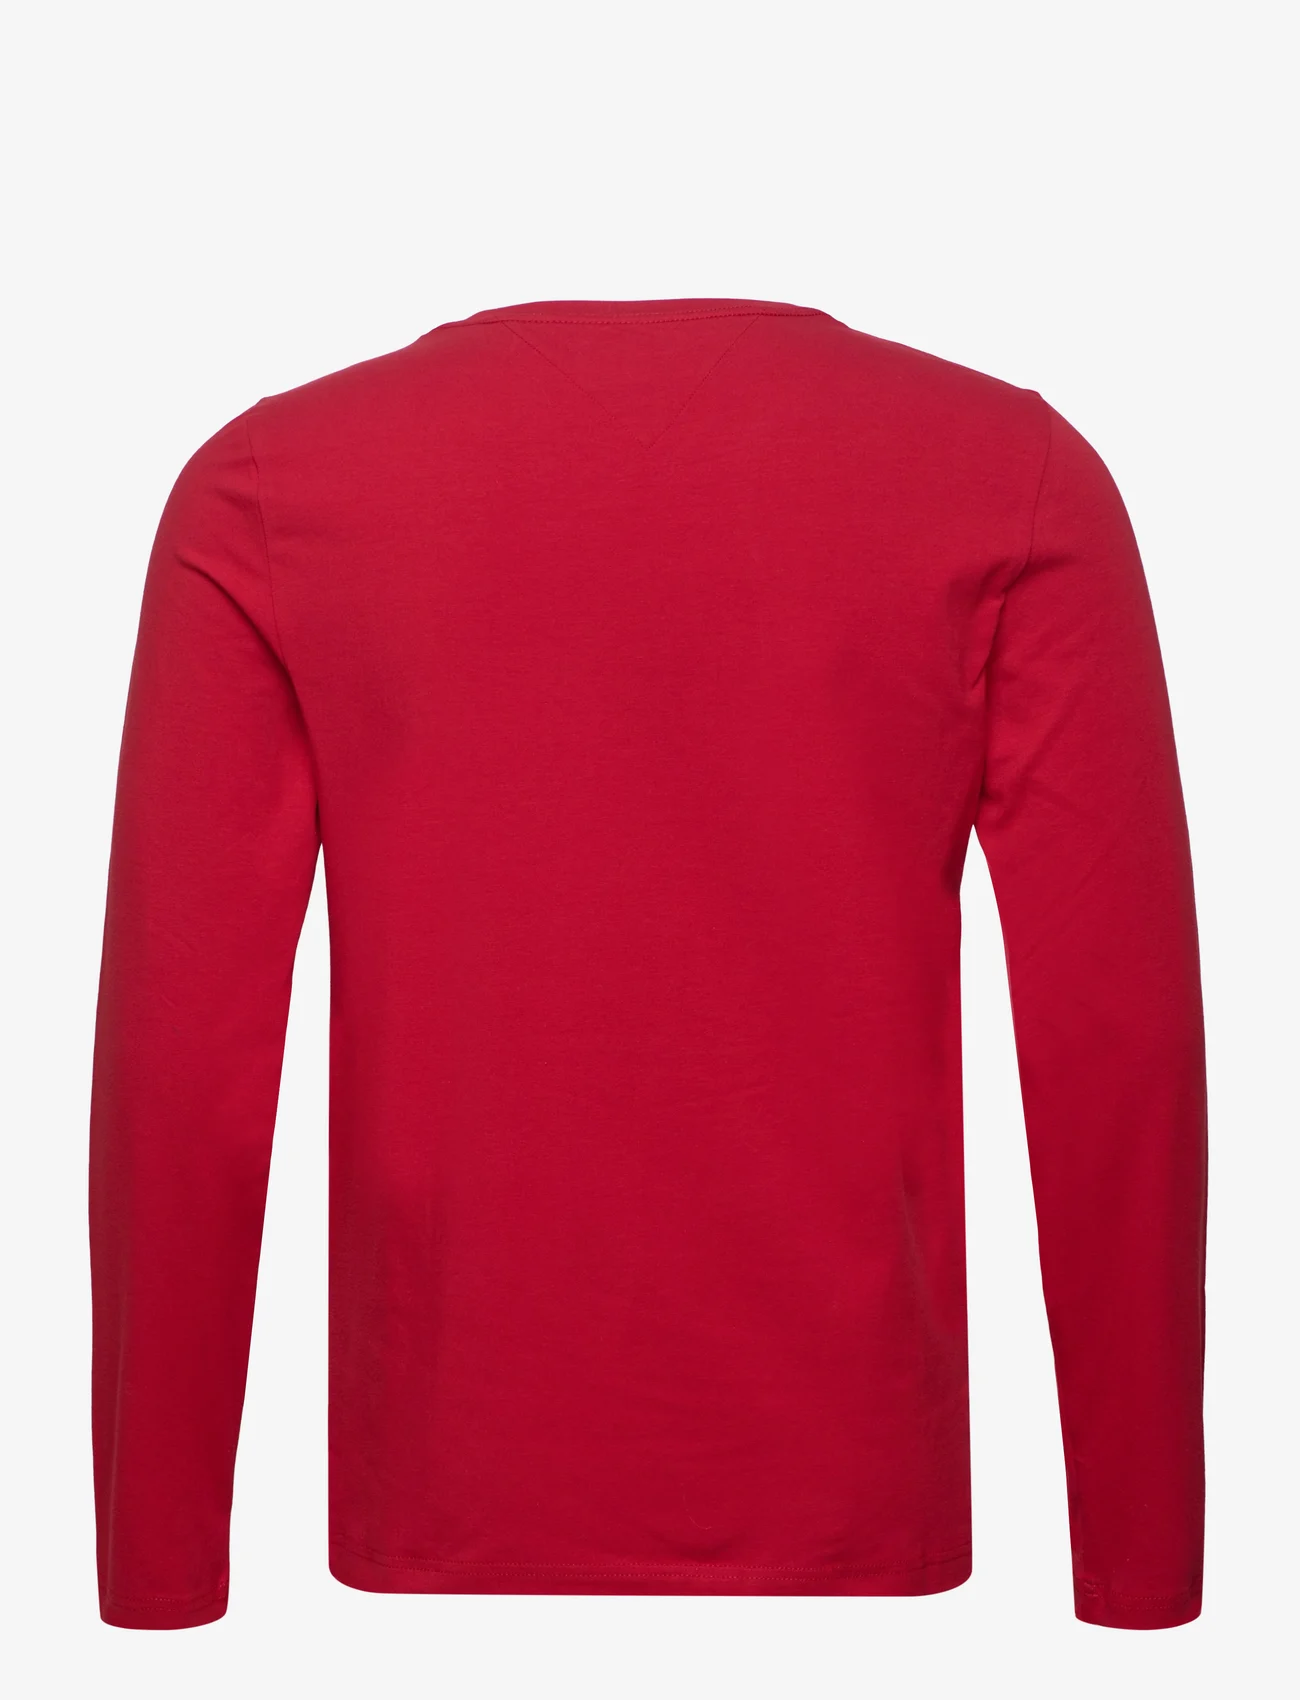 Tommy Hilfiger - STRETCH SLIM FIT LONG SLEEVE TEE - basic t-shirts - arizona red - 1